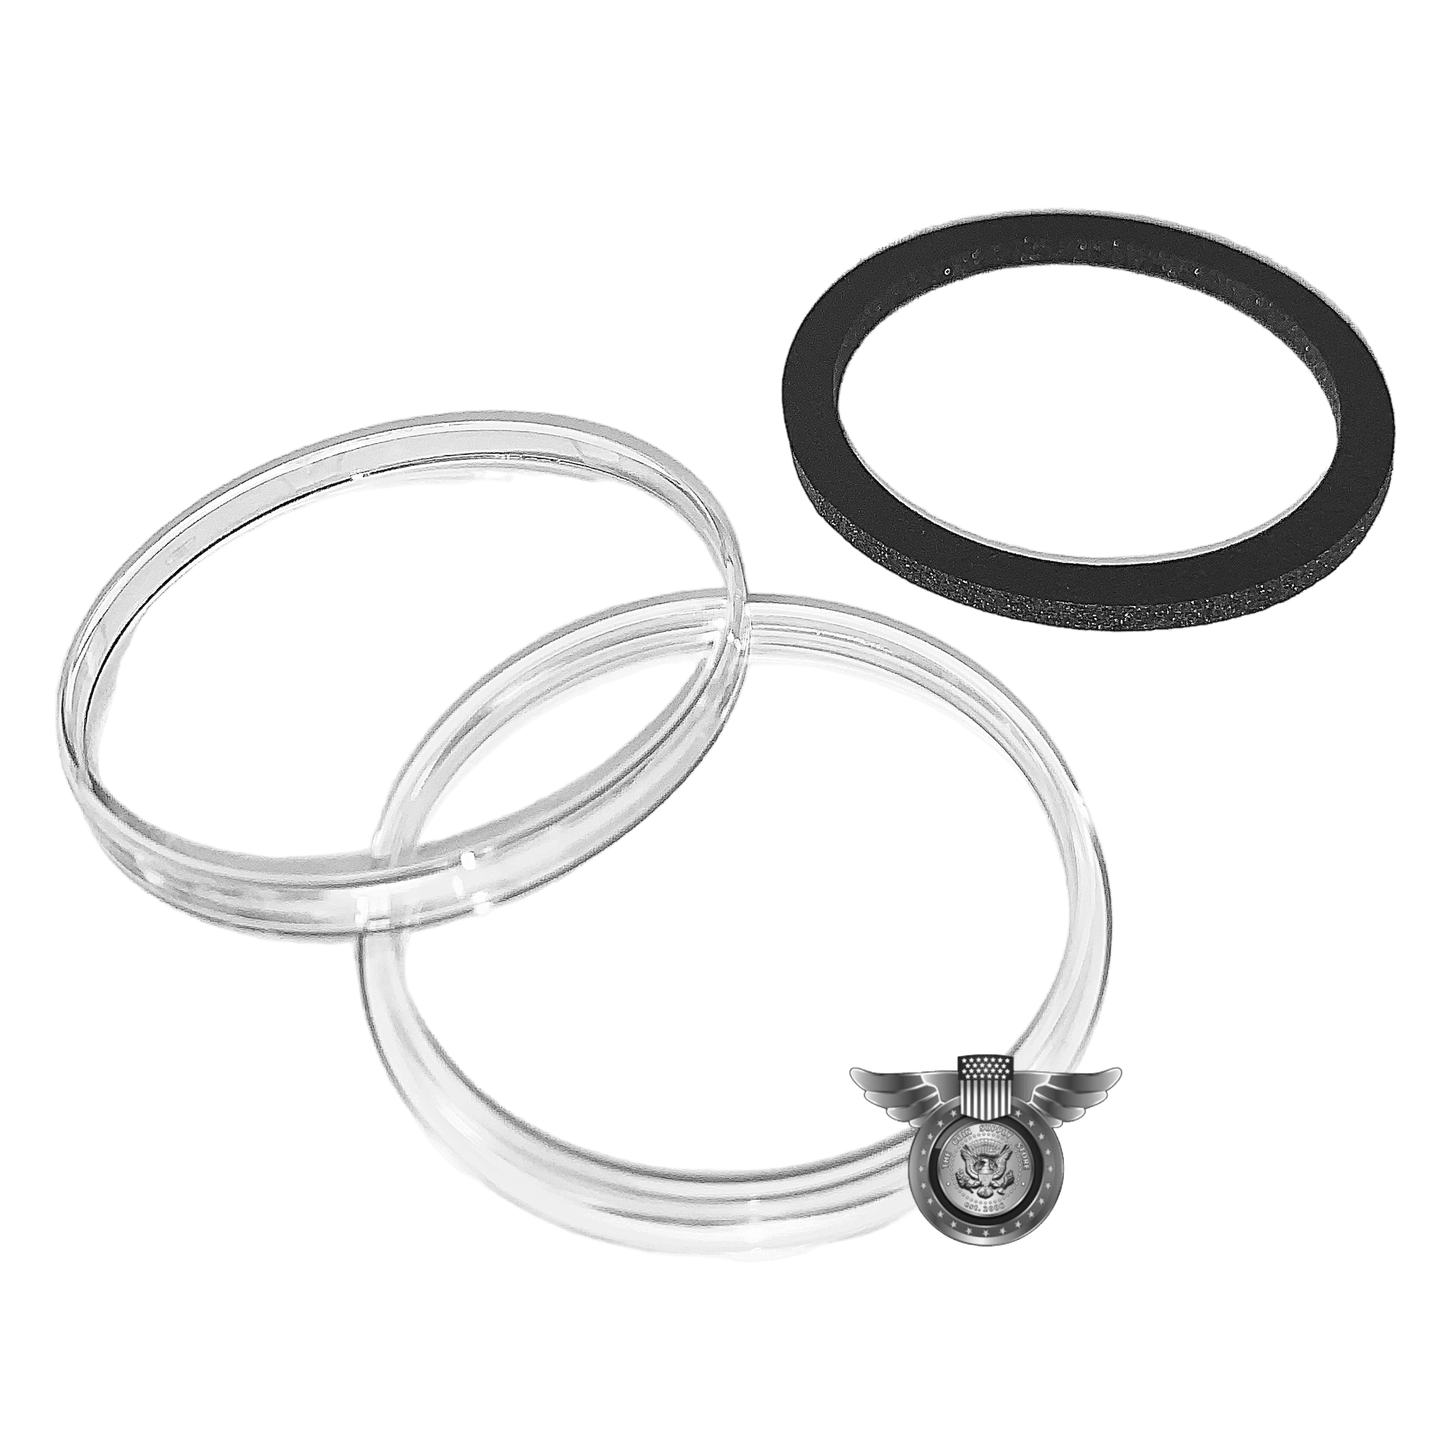 Ring Type Air-Tite Model I-Loop - 40mm Black (Ornament Holder)